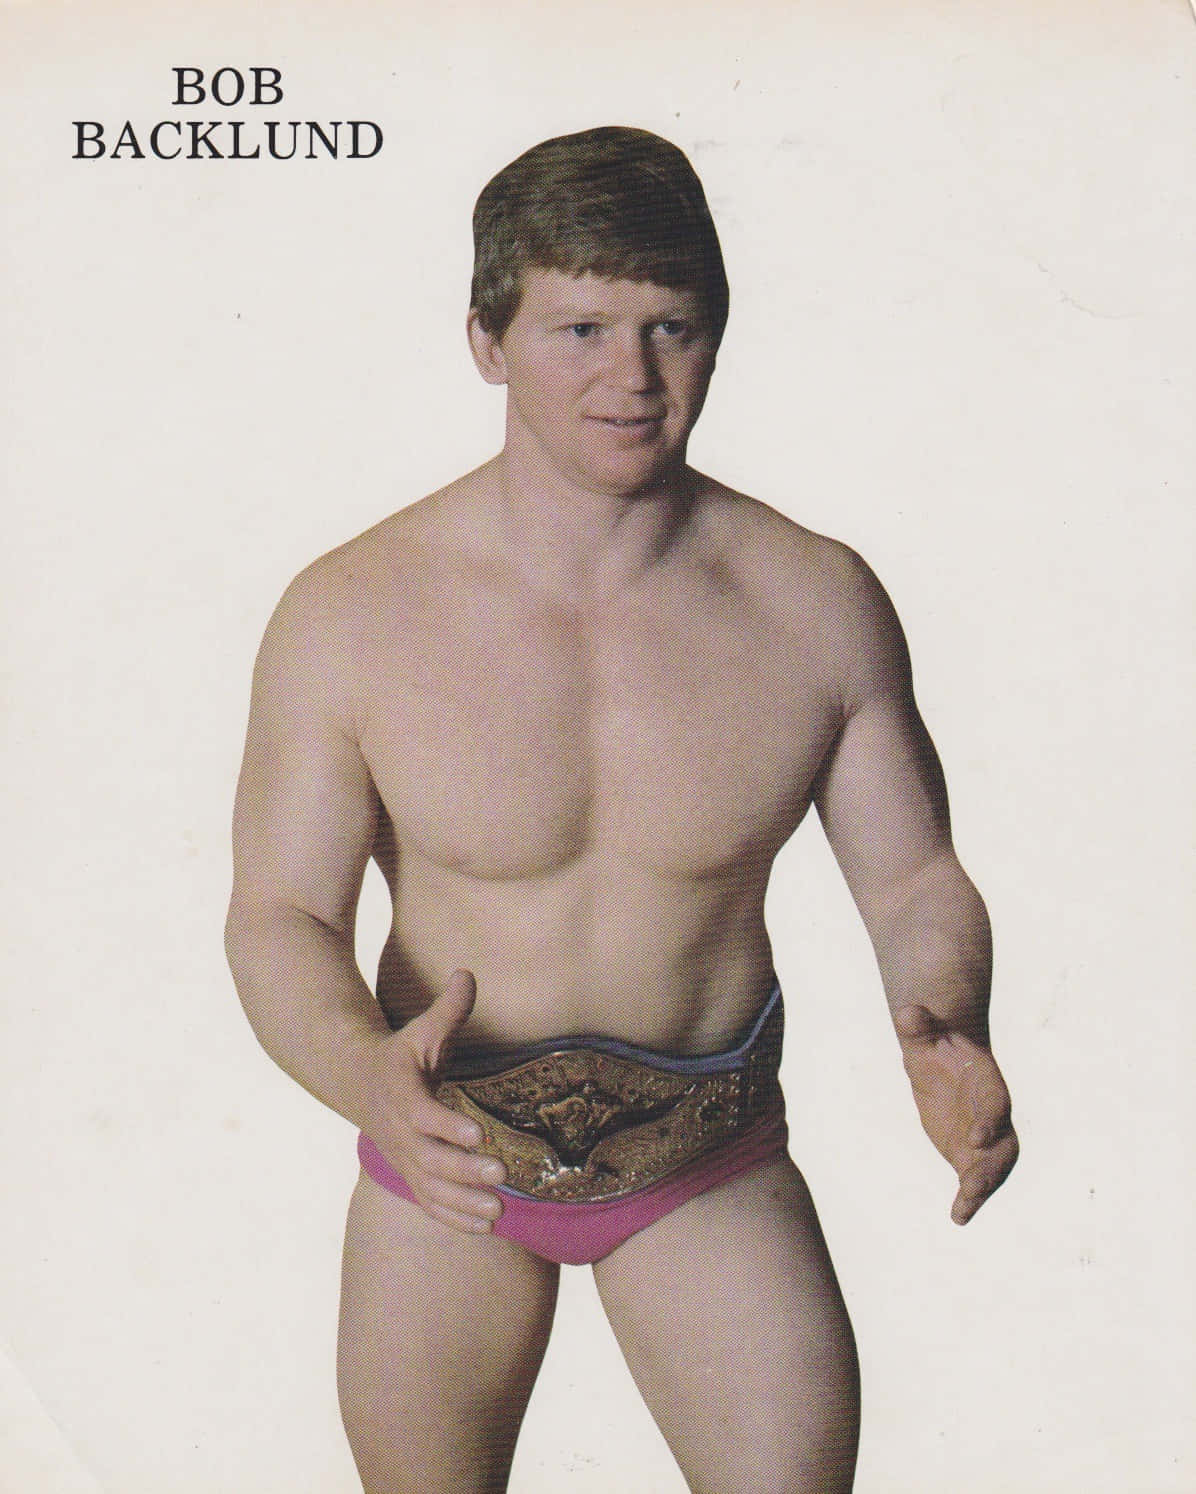 Caption: Classic Bob Backlund WWE Poster Wallpaper